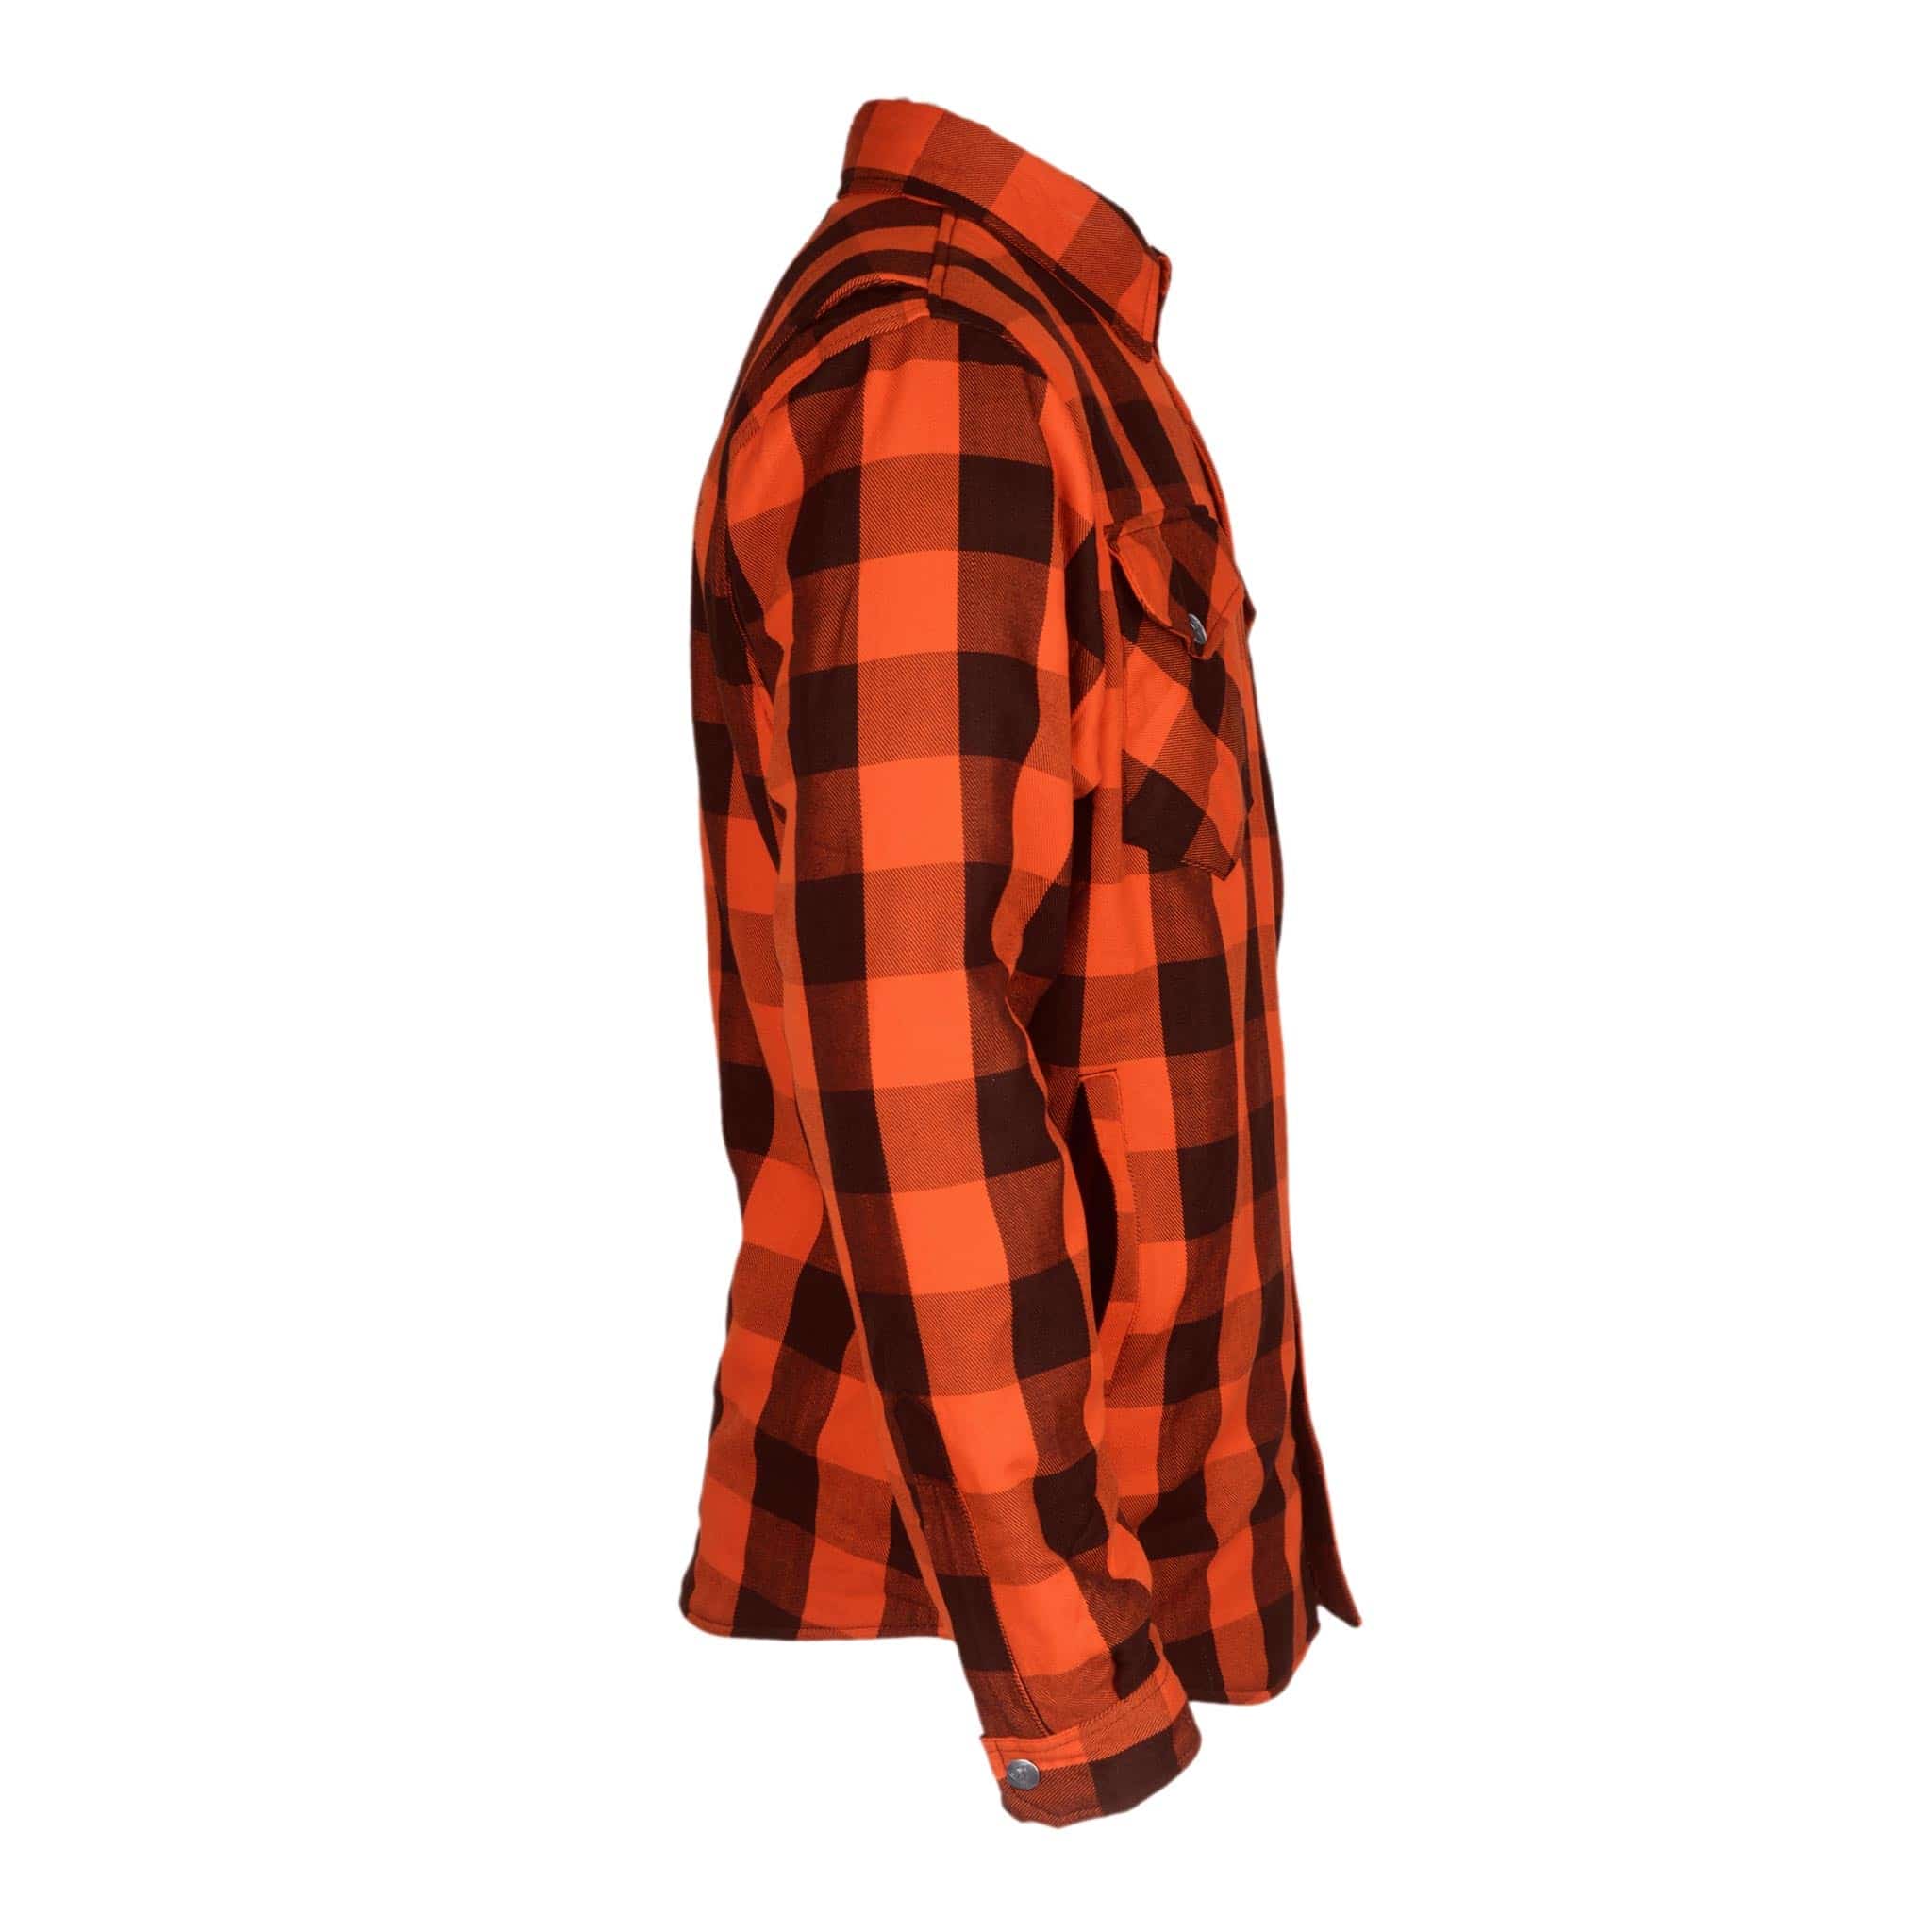 Protective Flannel Shirt "Autumn Blast" - Orange and Black Checkered